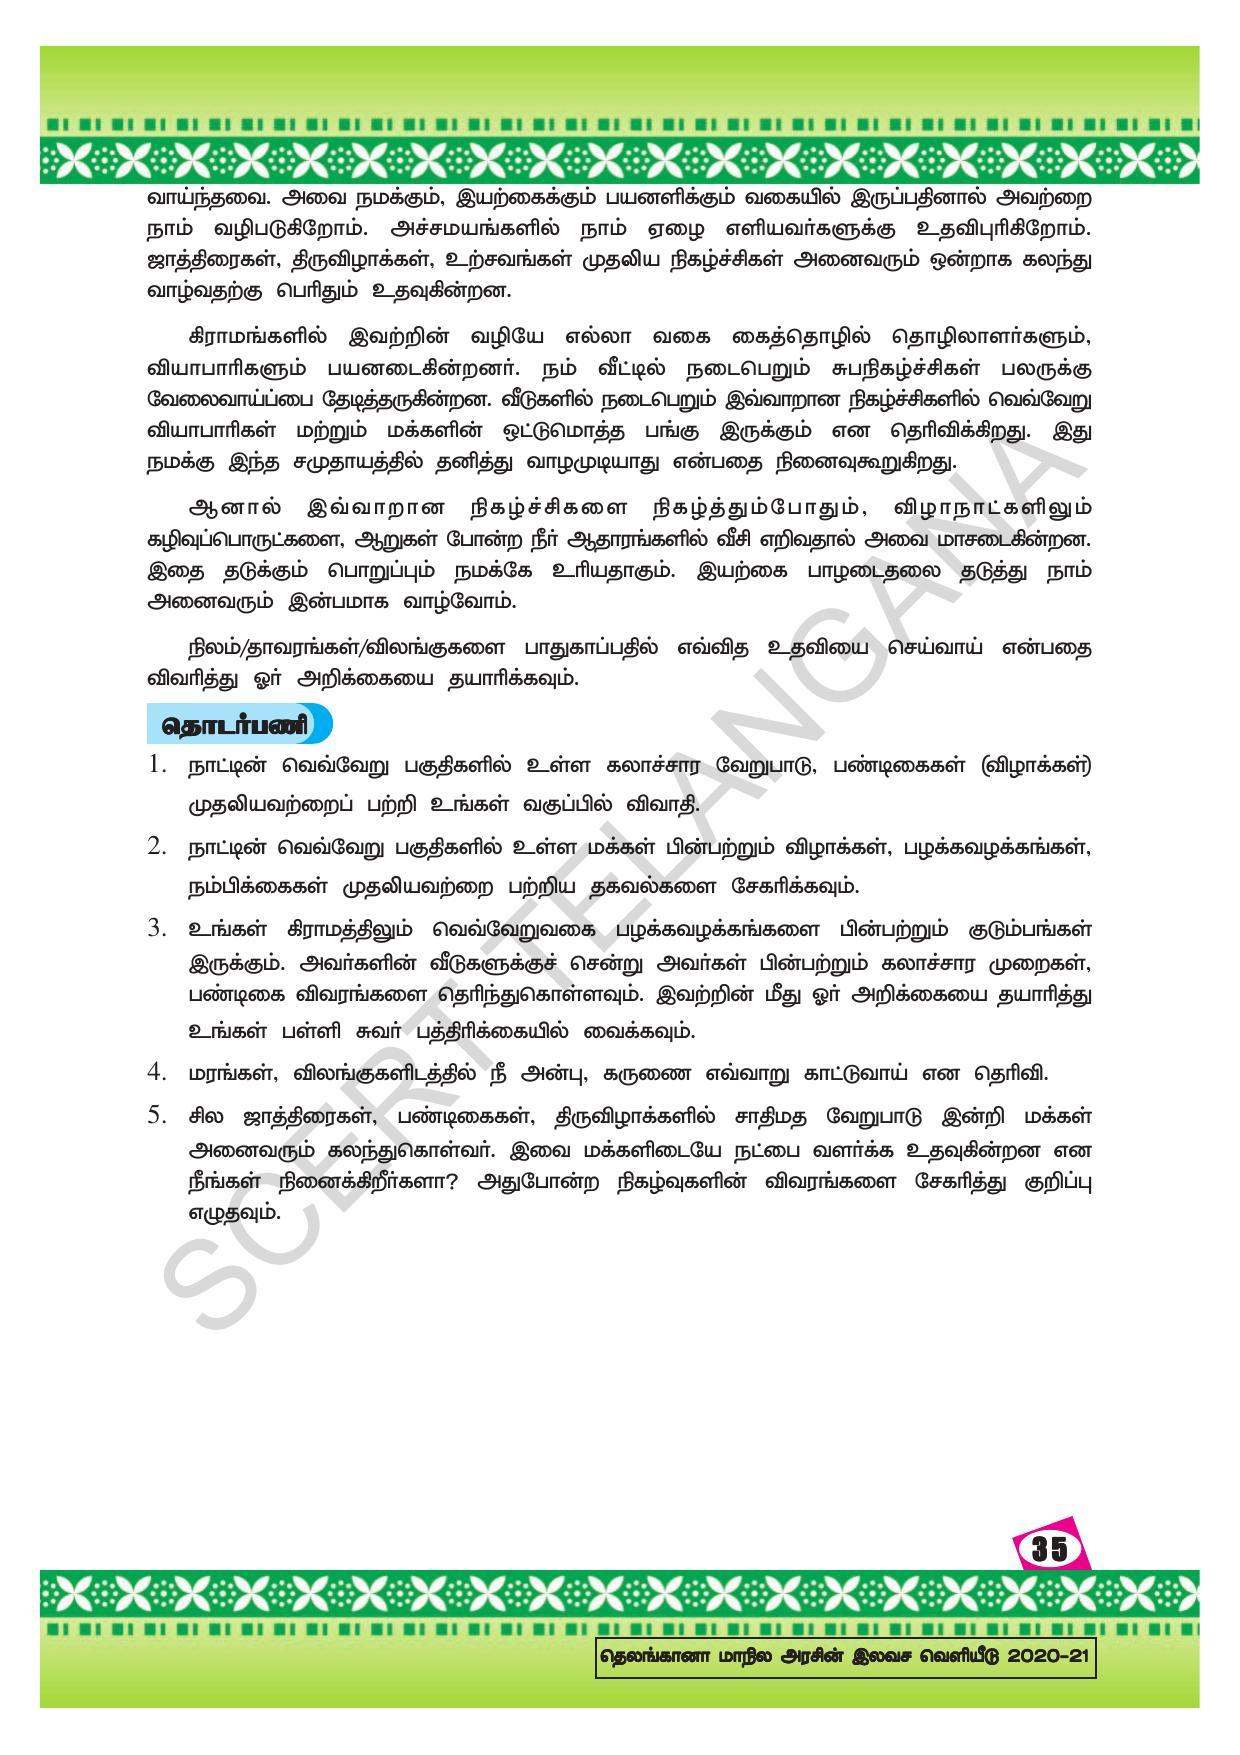 TS SCERT Class 10 Social Environmental Education (Tamil Medium) Text Book - Page 43